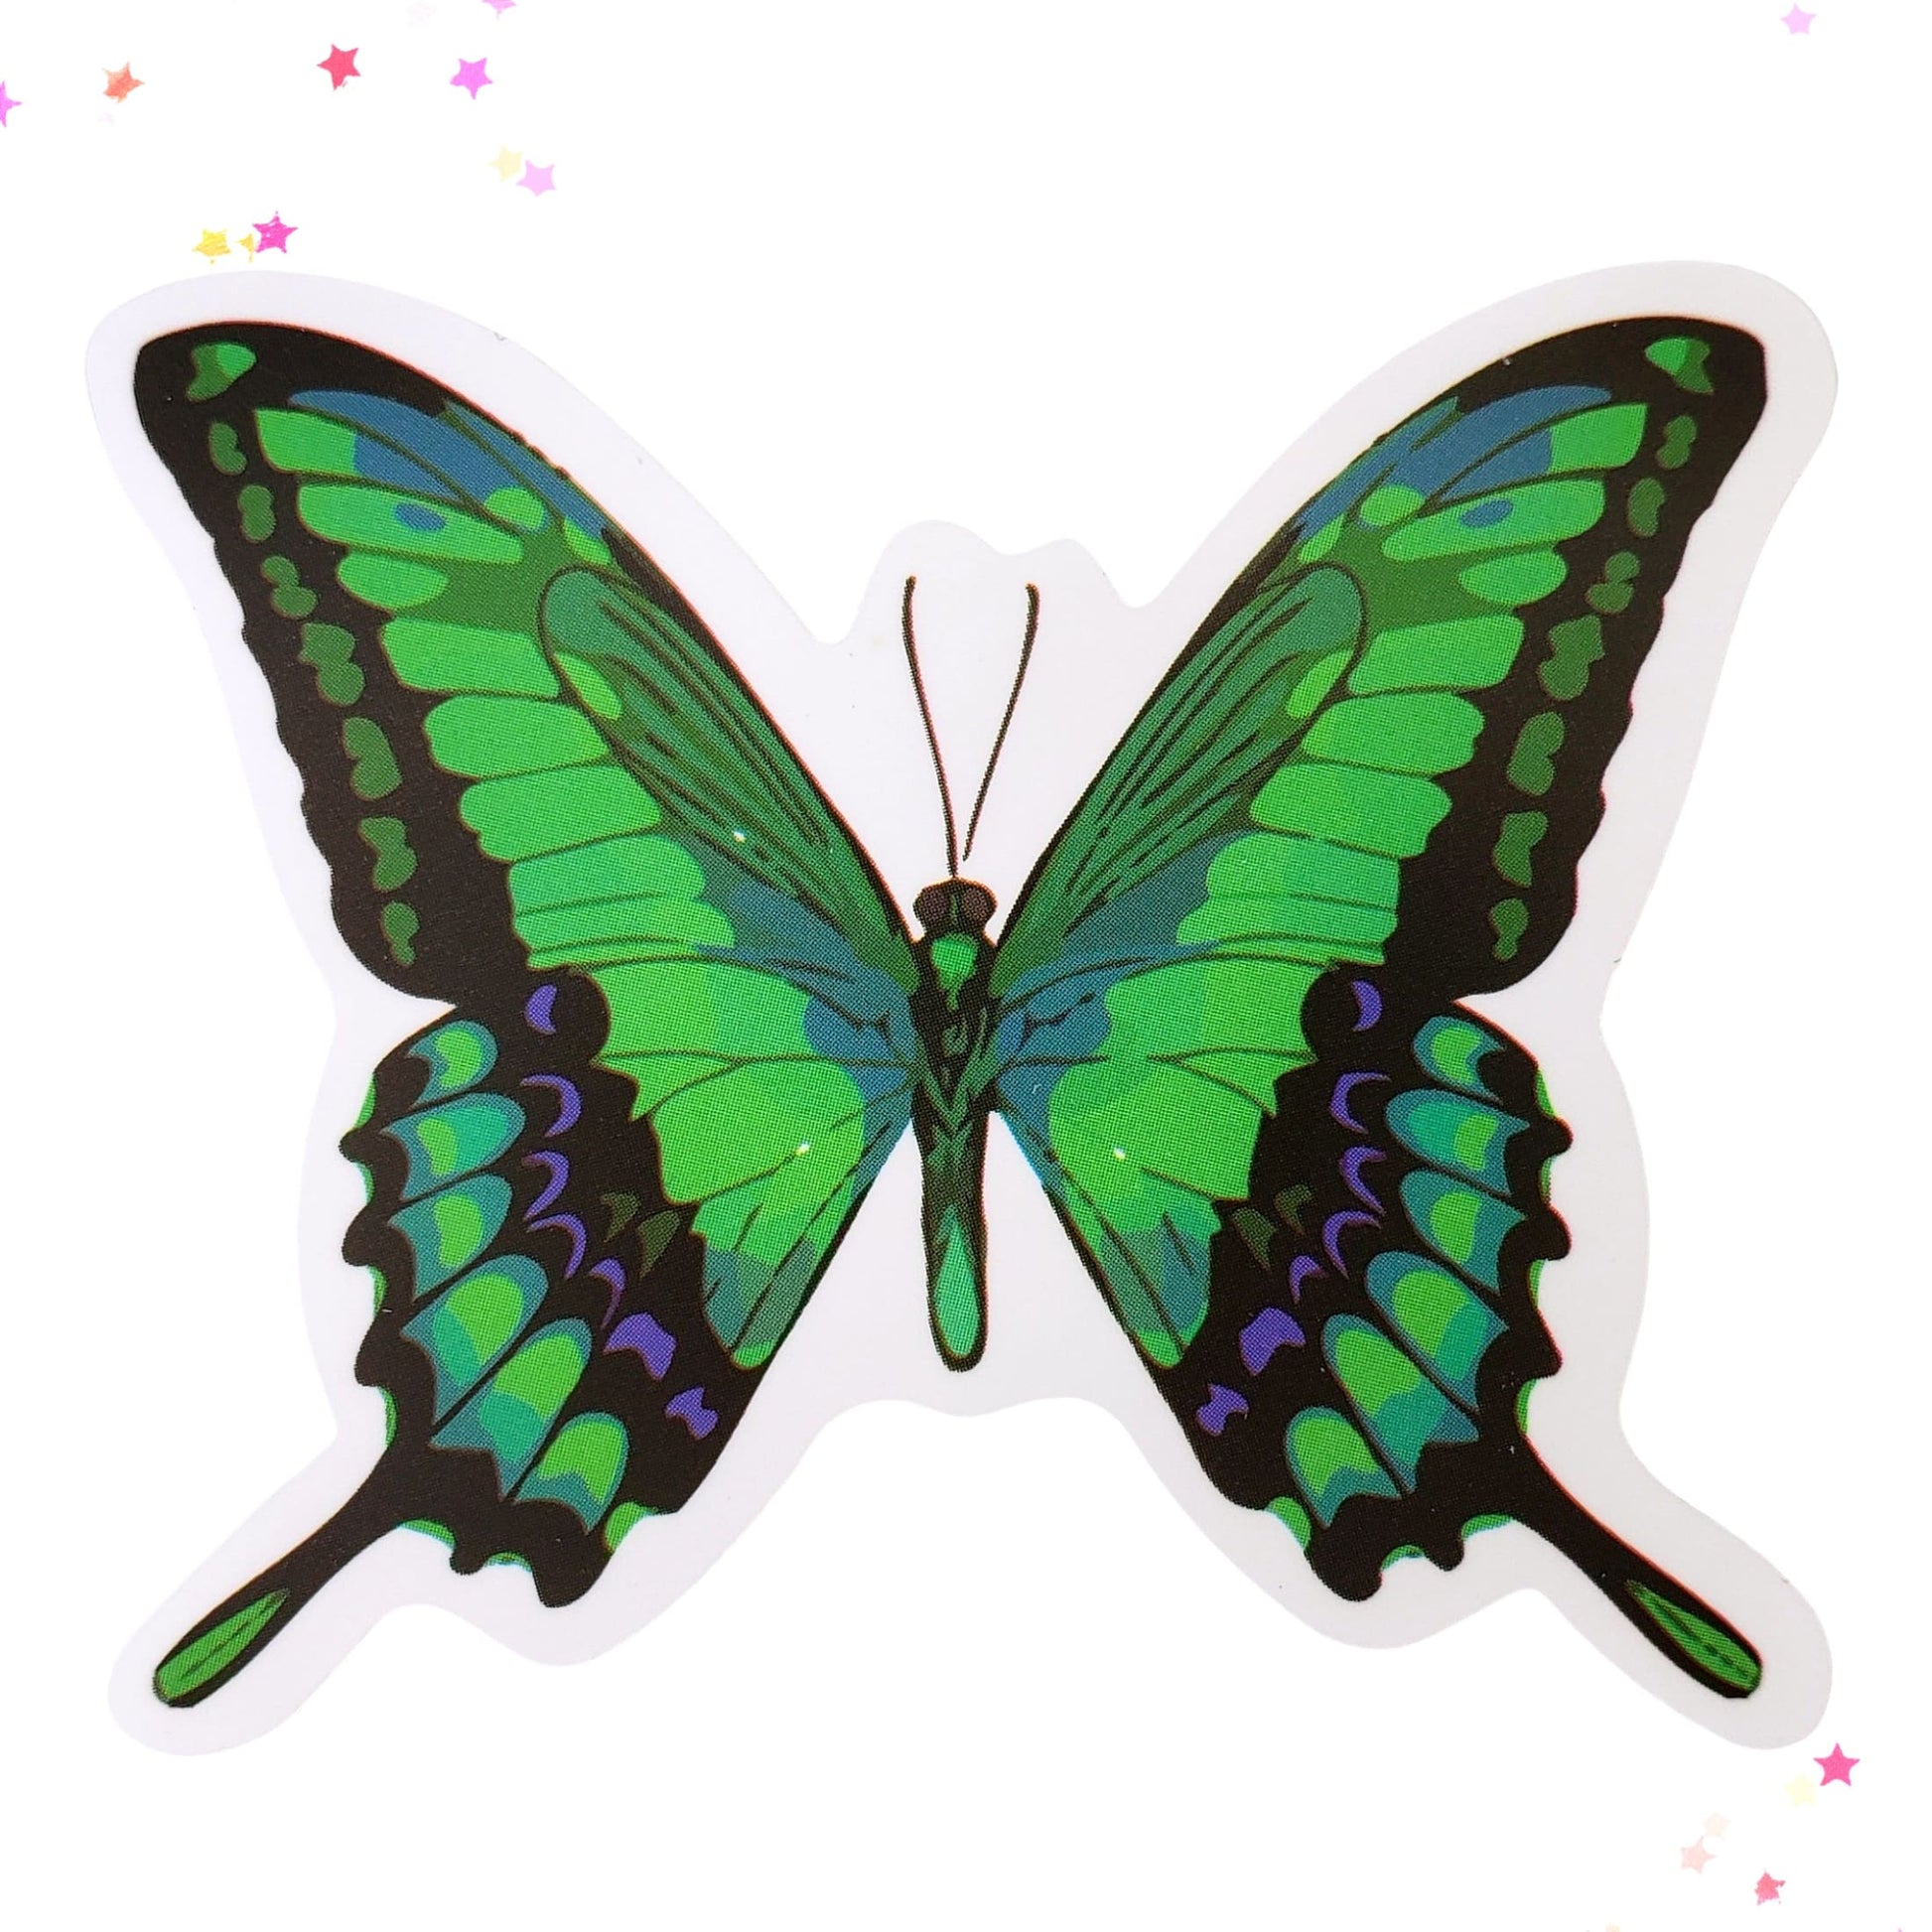 Emerald Swallowtail Butterfly Waterproof Sticker from Confetti Kitty, Only 1.00